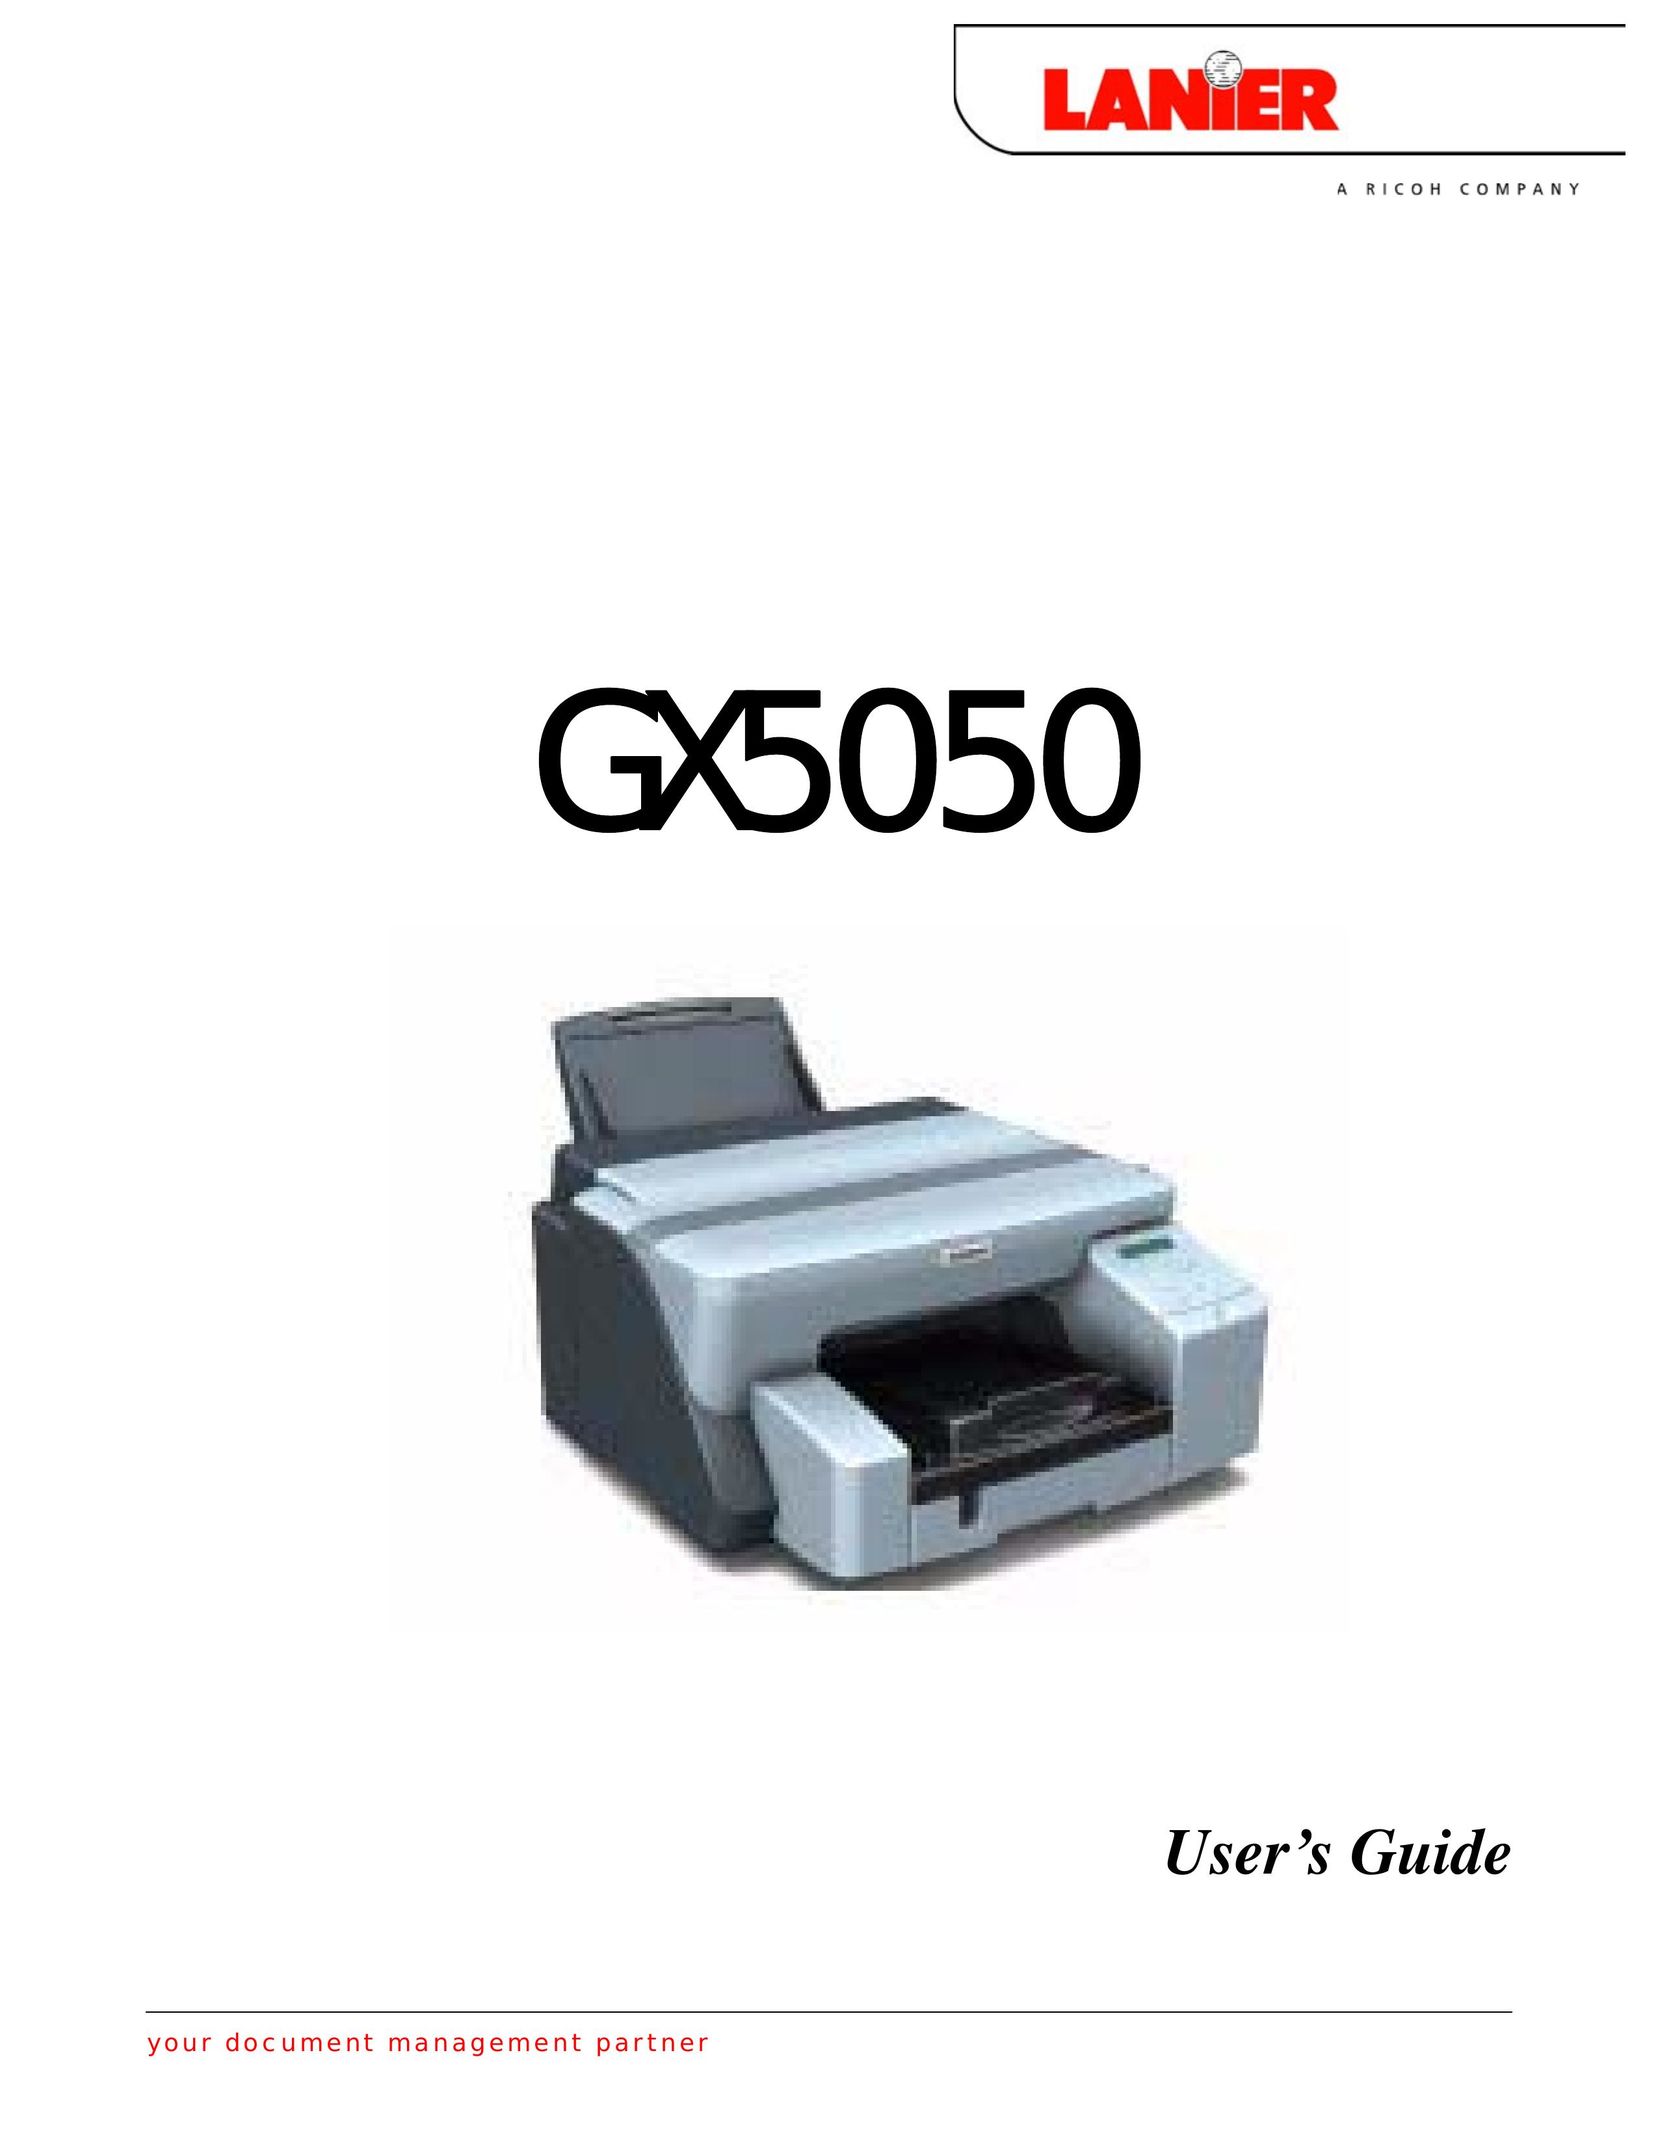 Lanier GX5050 Printer User Manual